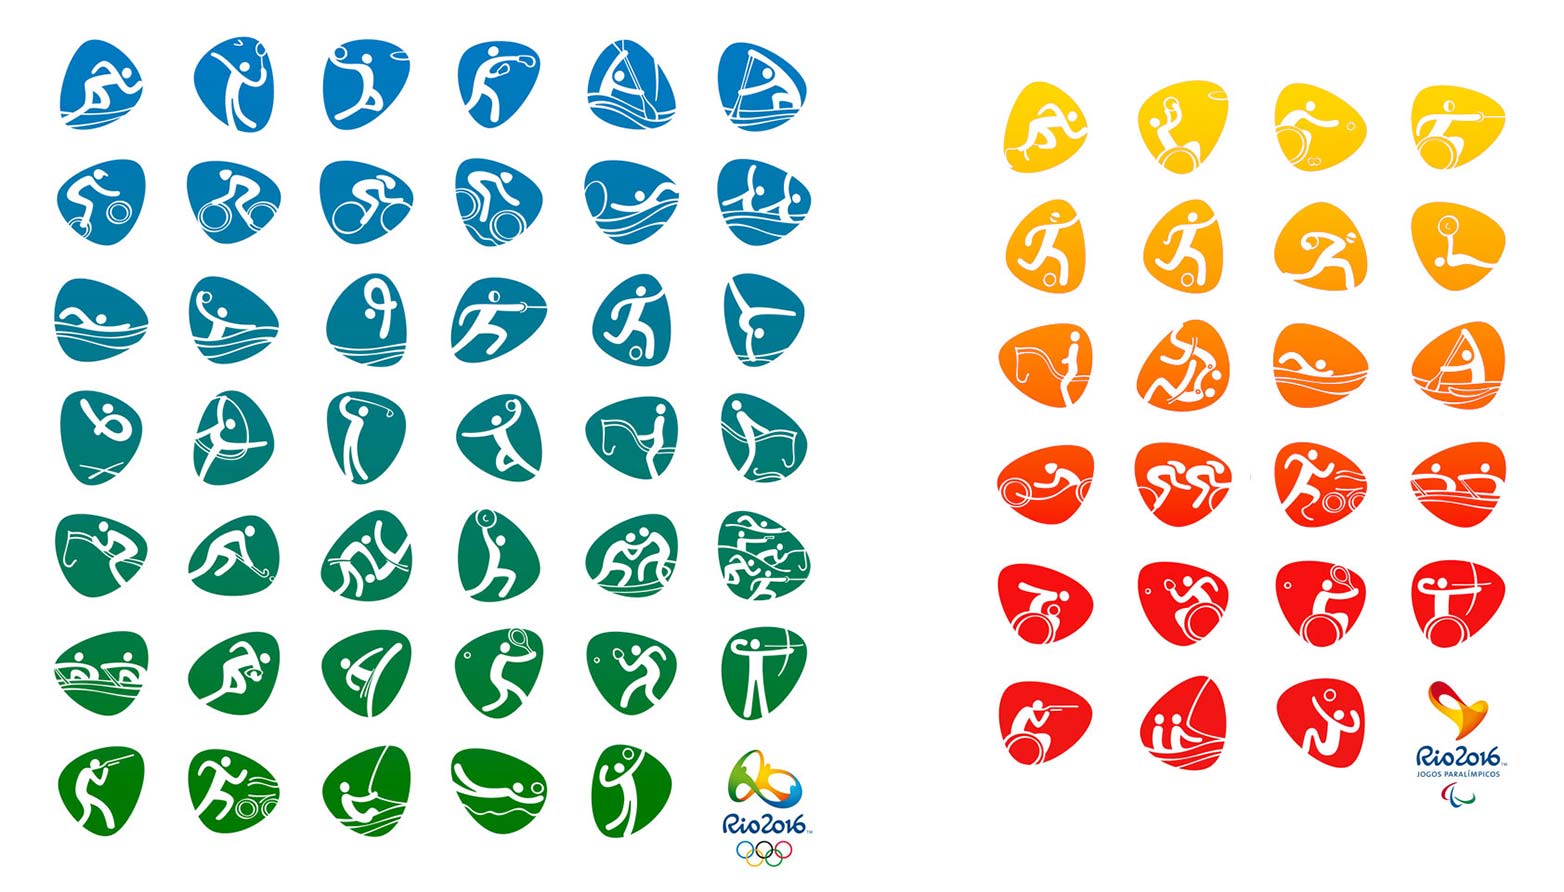 Olympics Rio 2016 Pictograms